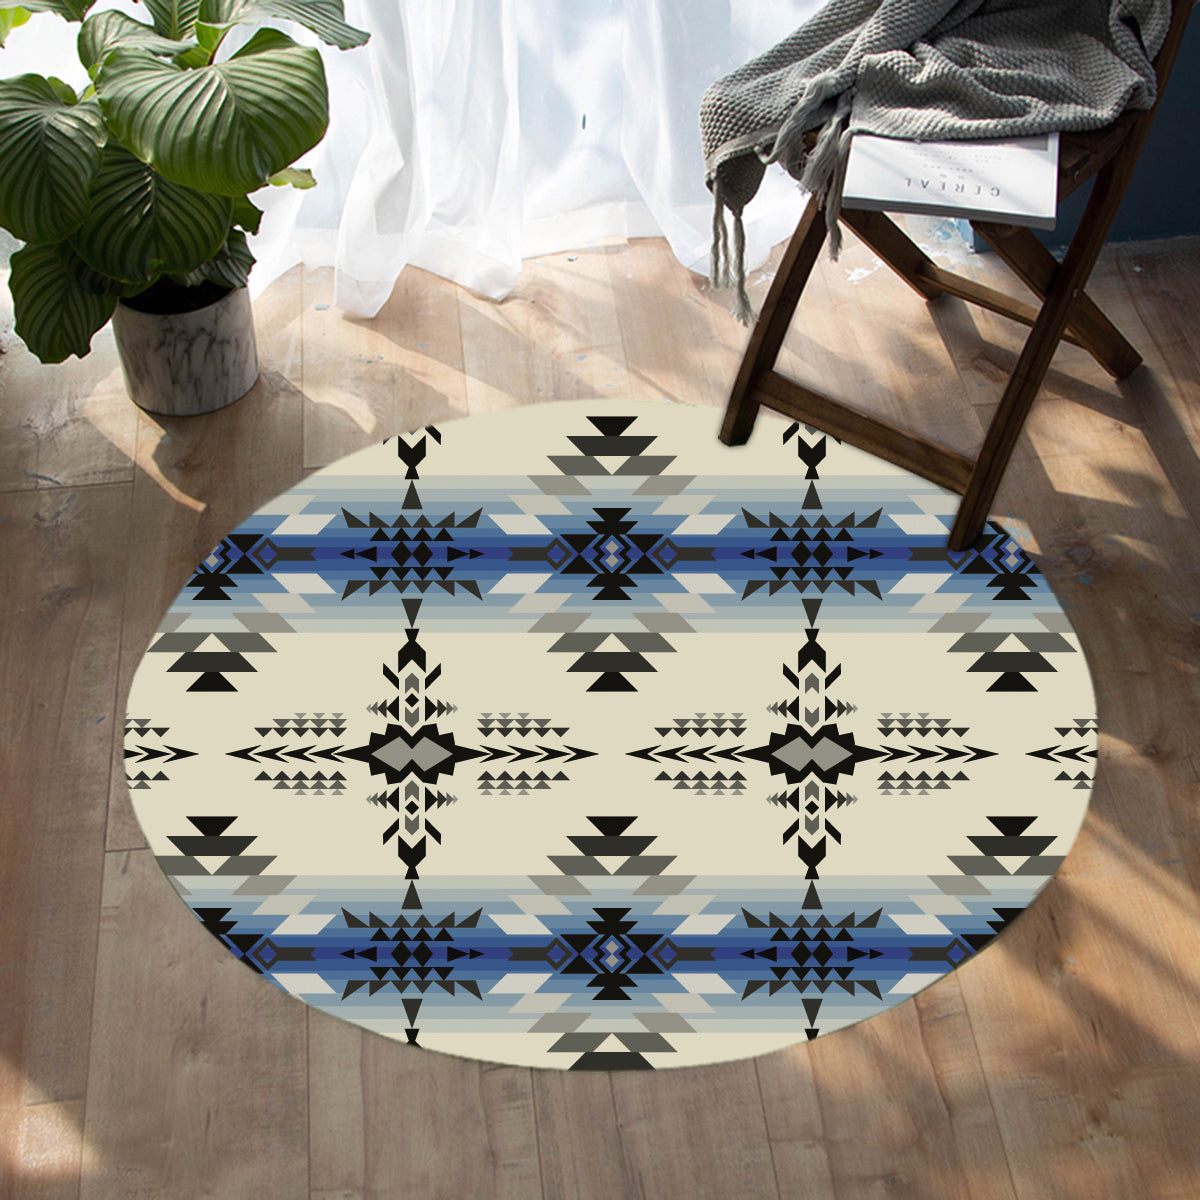 native-american-geometric-pattern-round-carpet